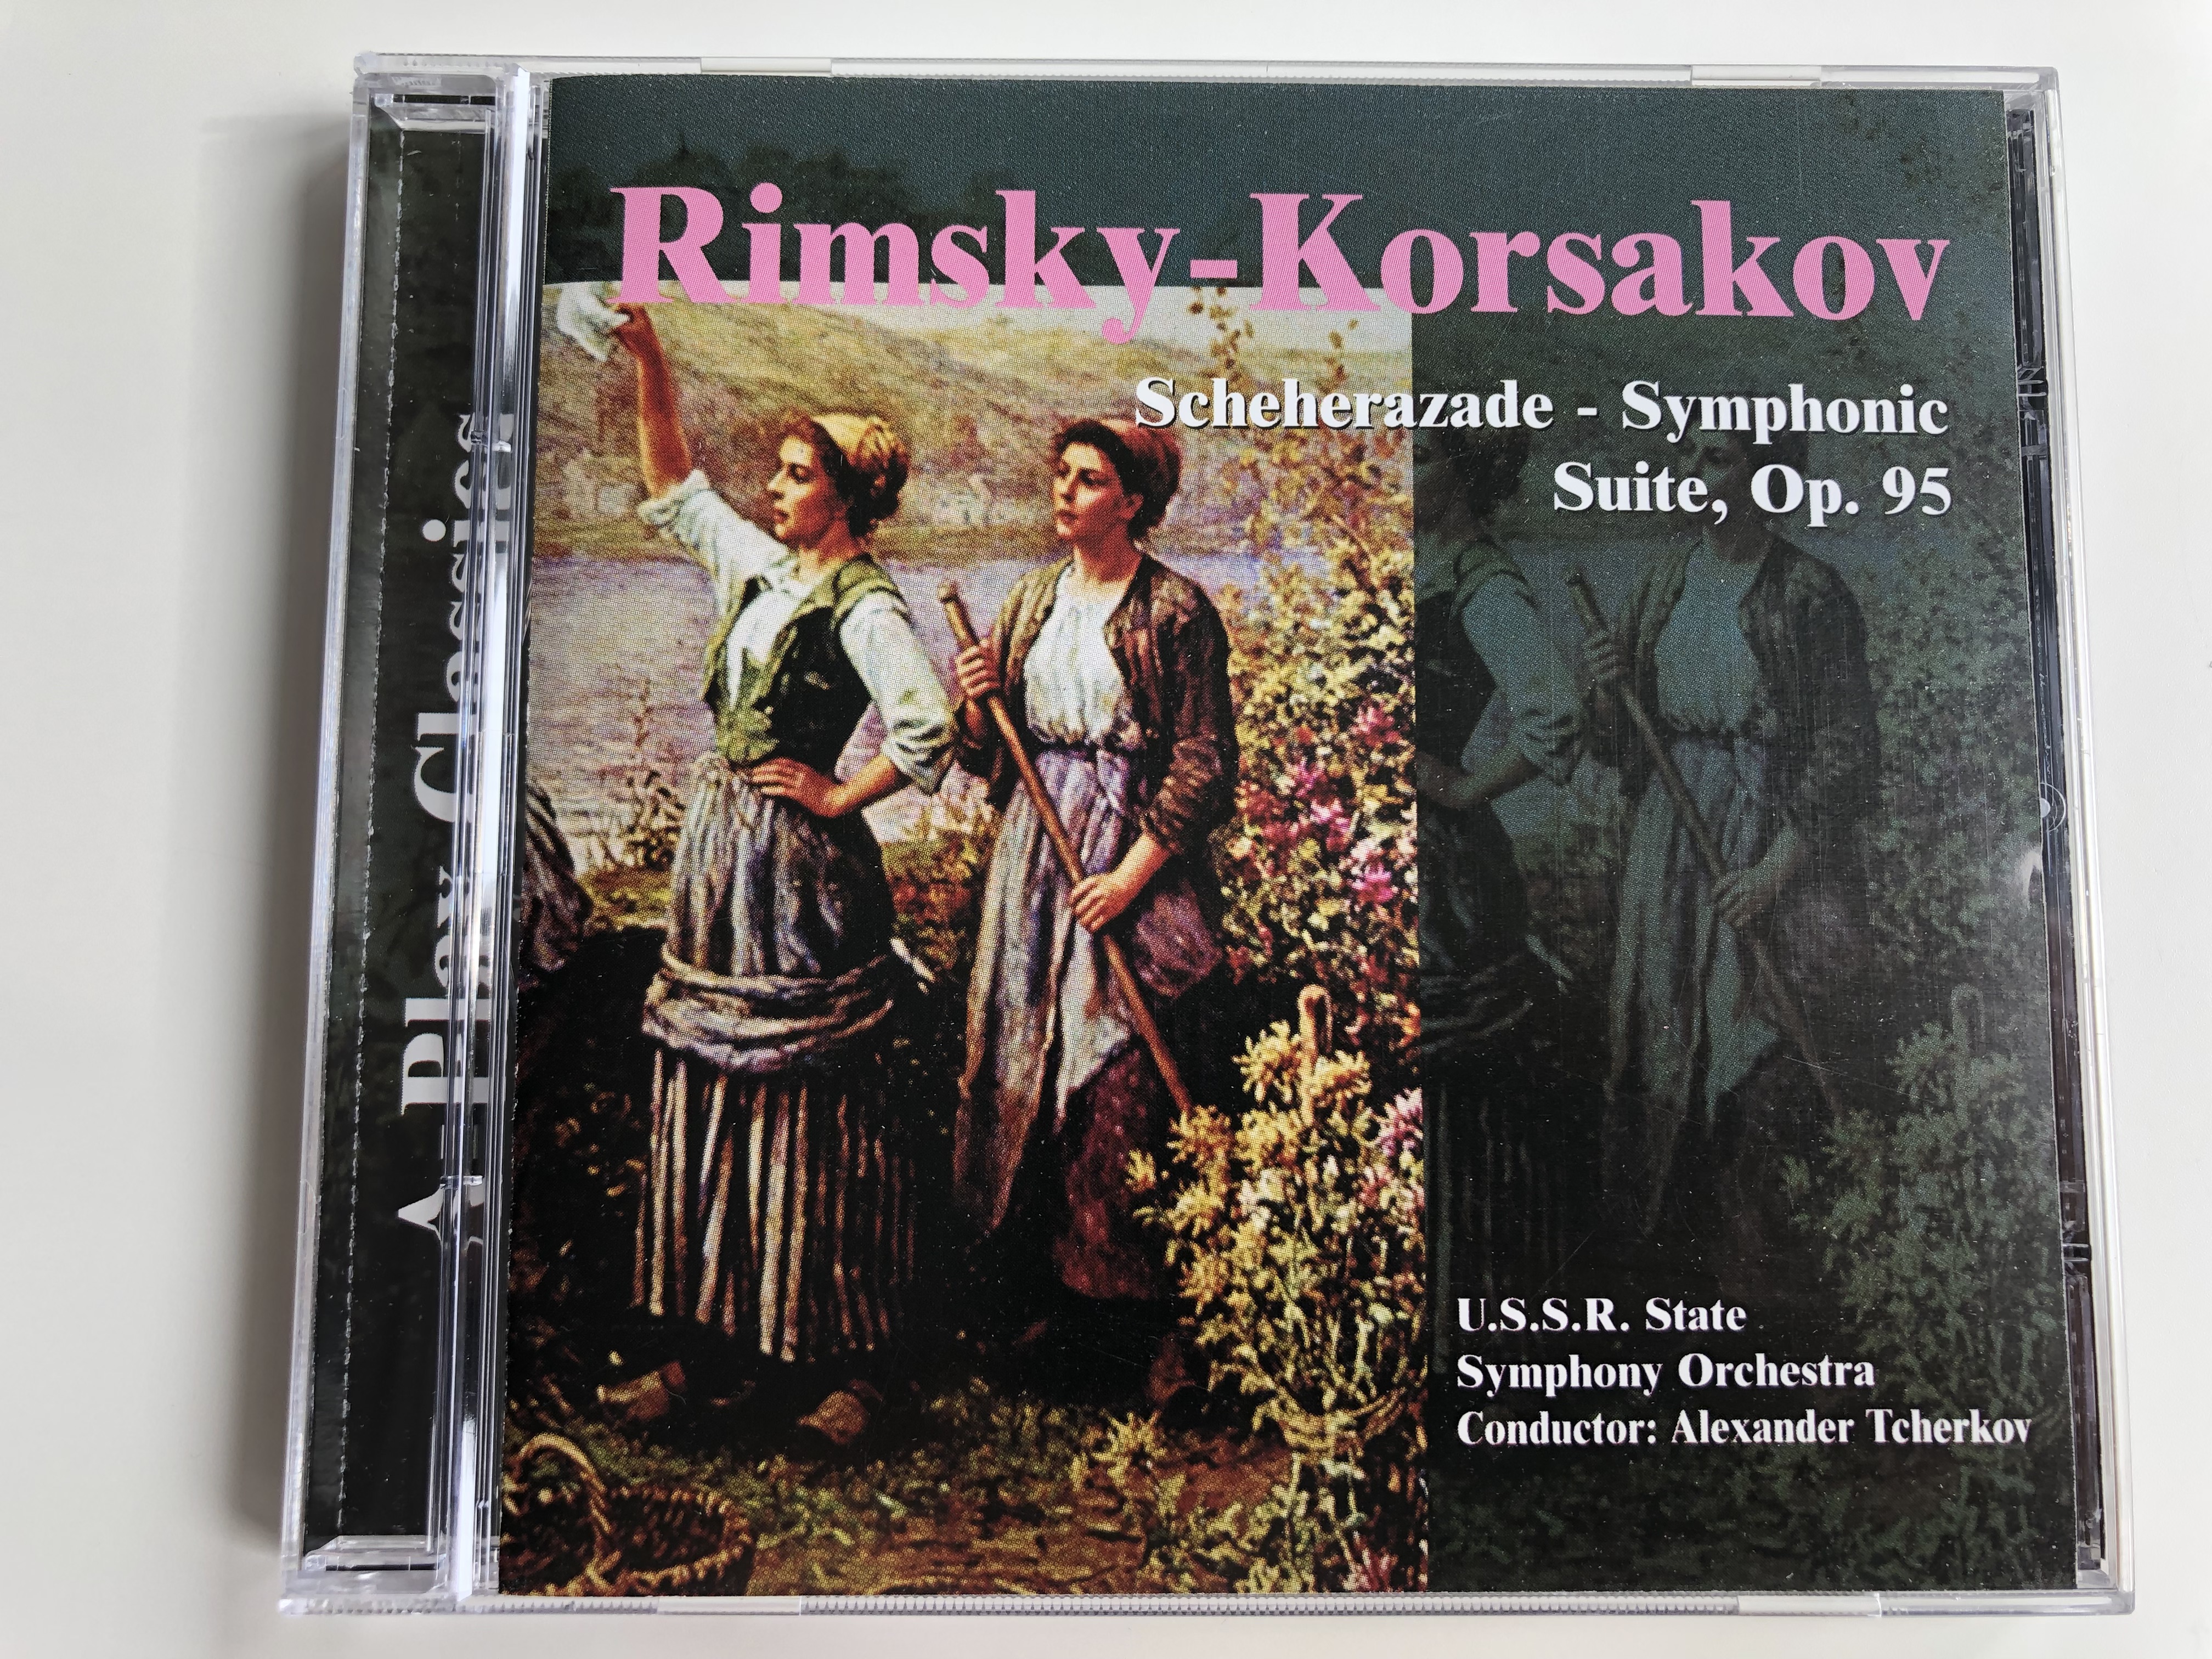 rimsky-korsakov-scheherazade-symphonic-suite-op.-95-u.s.s.r-state-symphony-orchestra-conducted-alexander-tcherkov-a-play-classics-audio-cd-9043-2-1-.jpg